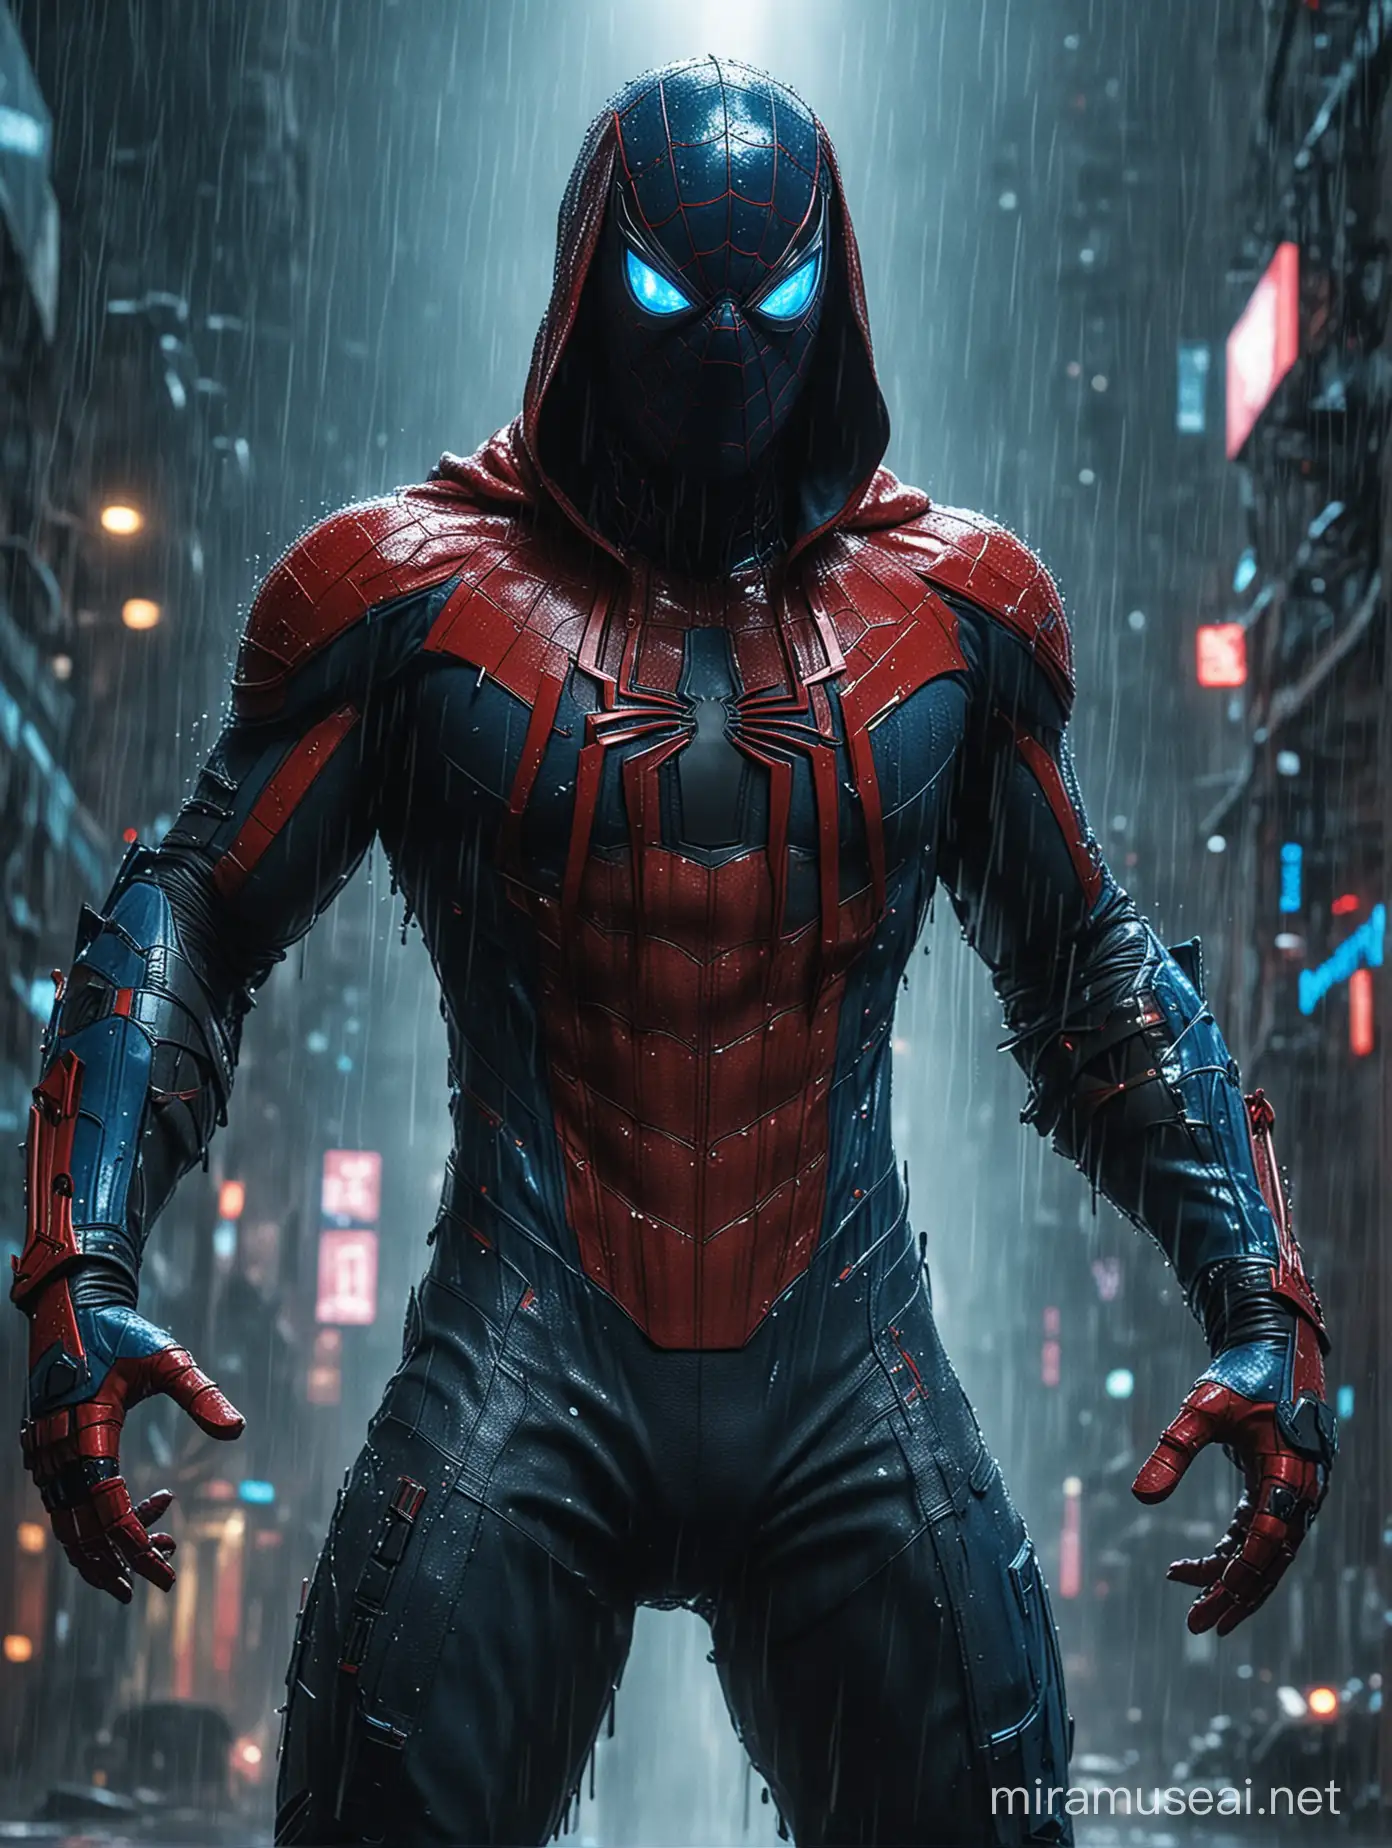 Enzo Vogrincic in Spiderman Costume in Cyberpunk Rainy Night